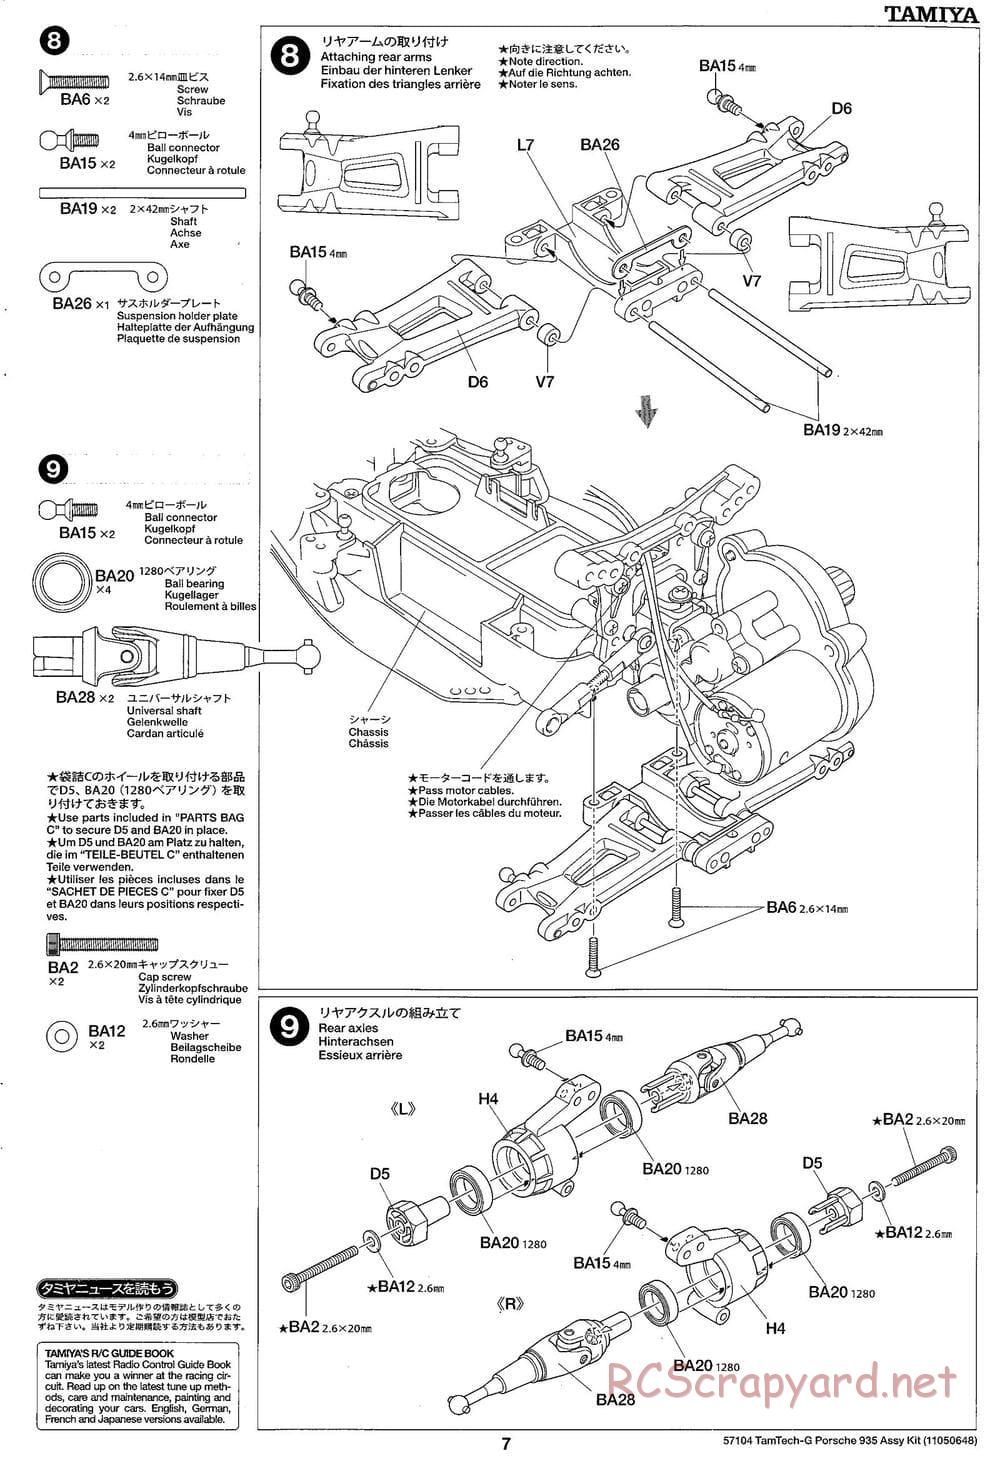 Tamiya - Porsche 935 Martini - GT-01 Chassis - Manual - Page 7